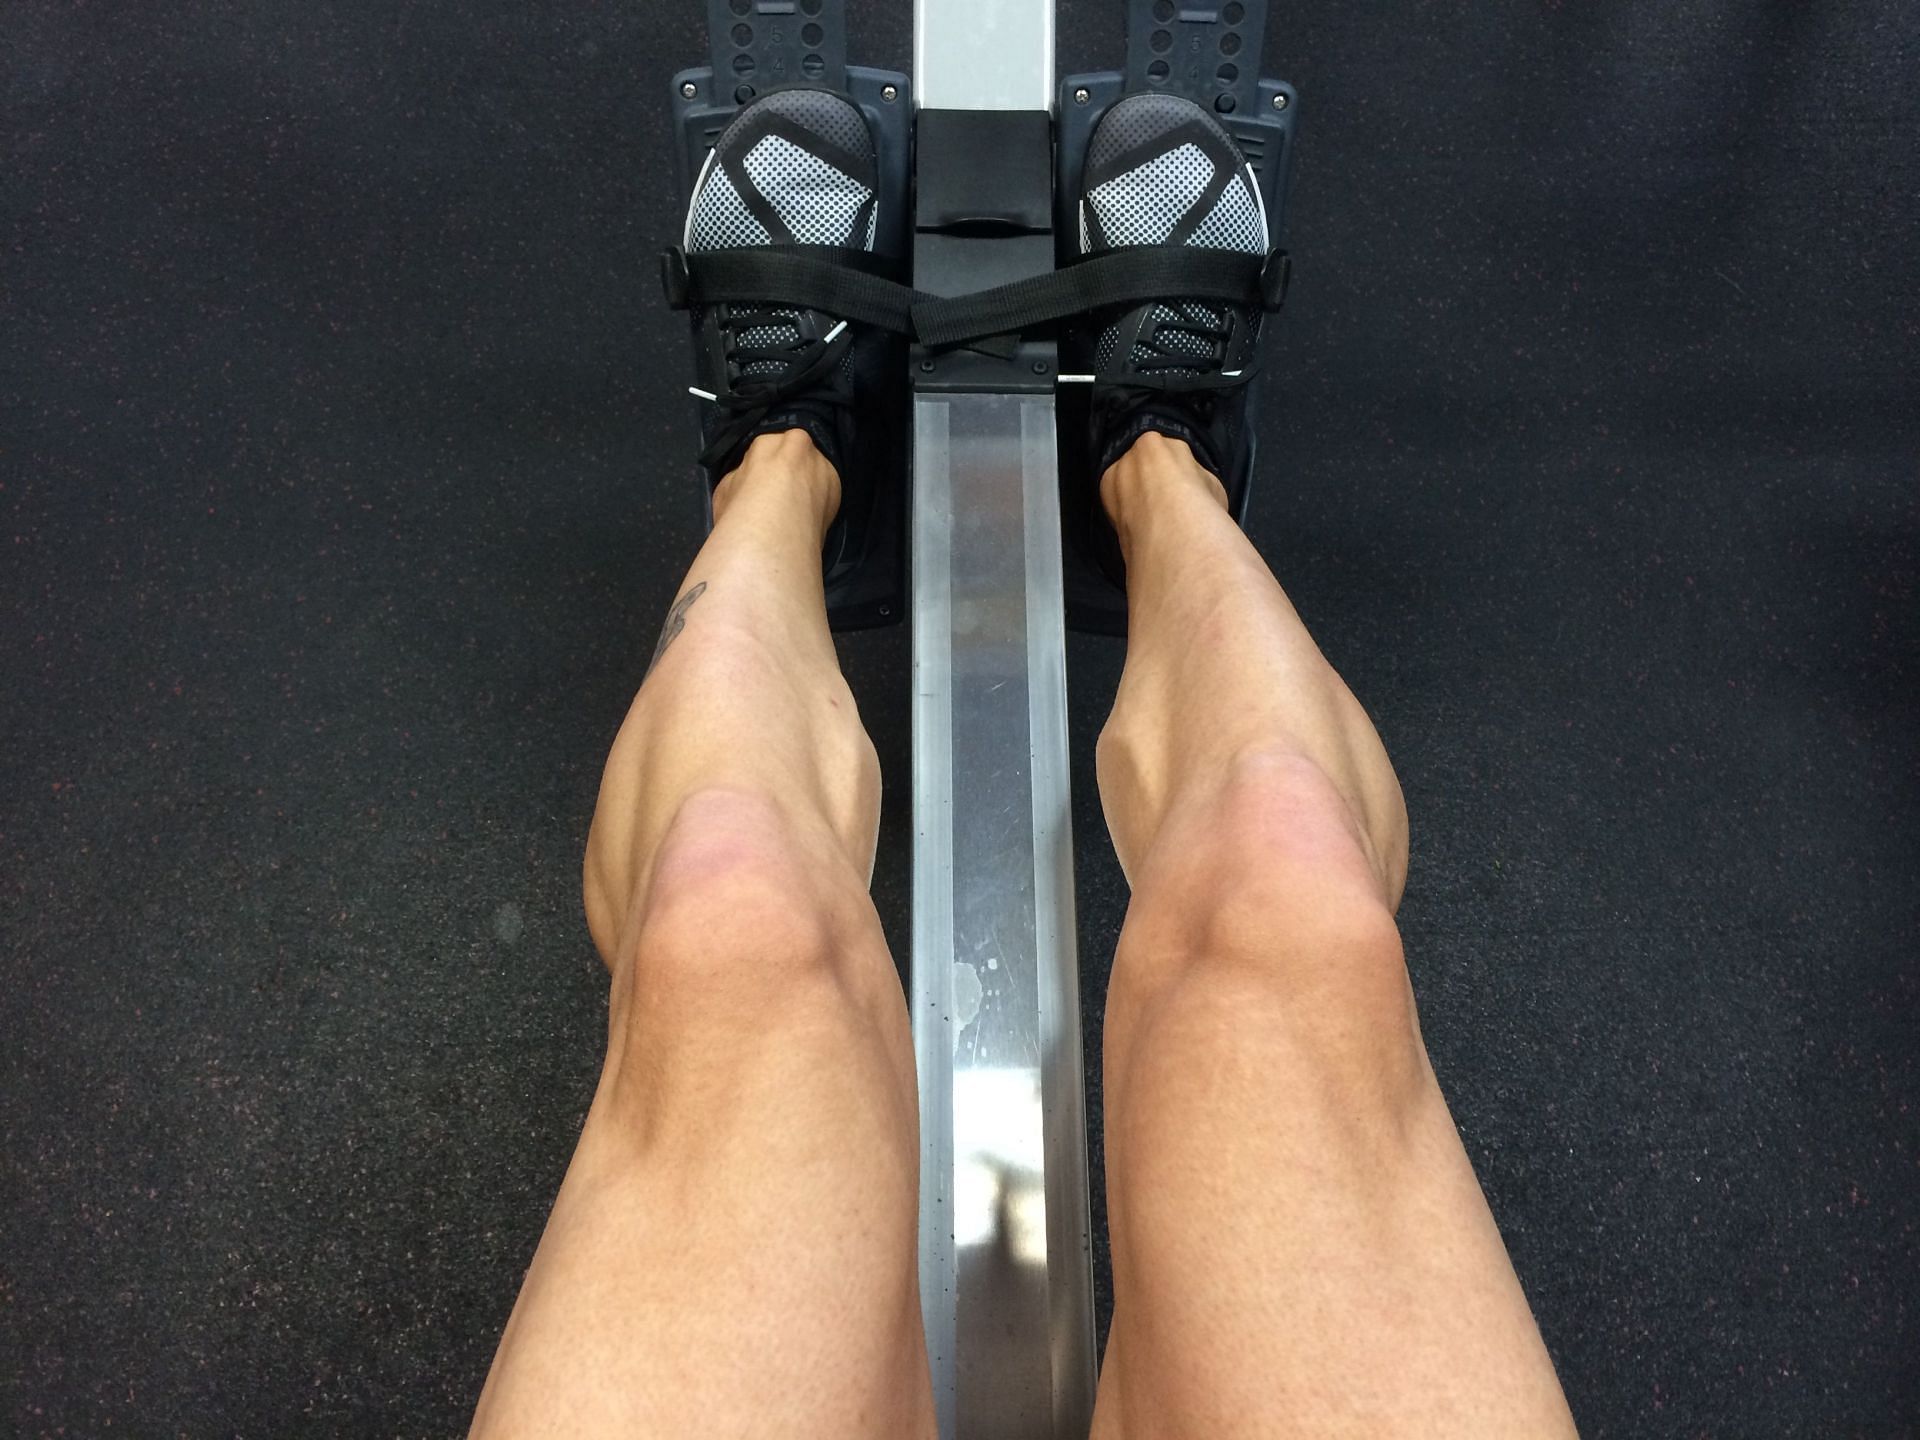 Benefits of rowing machine include improved muscular endurance (Image via Unsplash/Kyle Kranz)